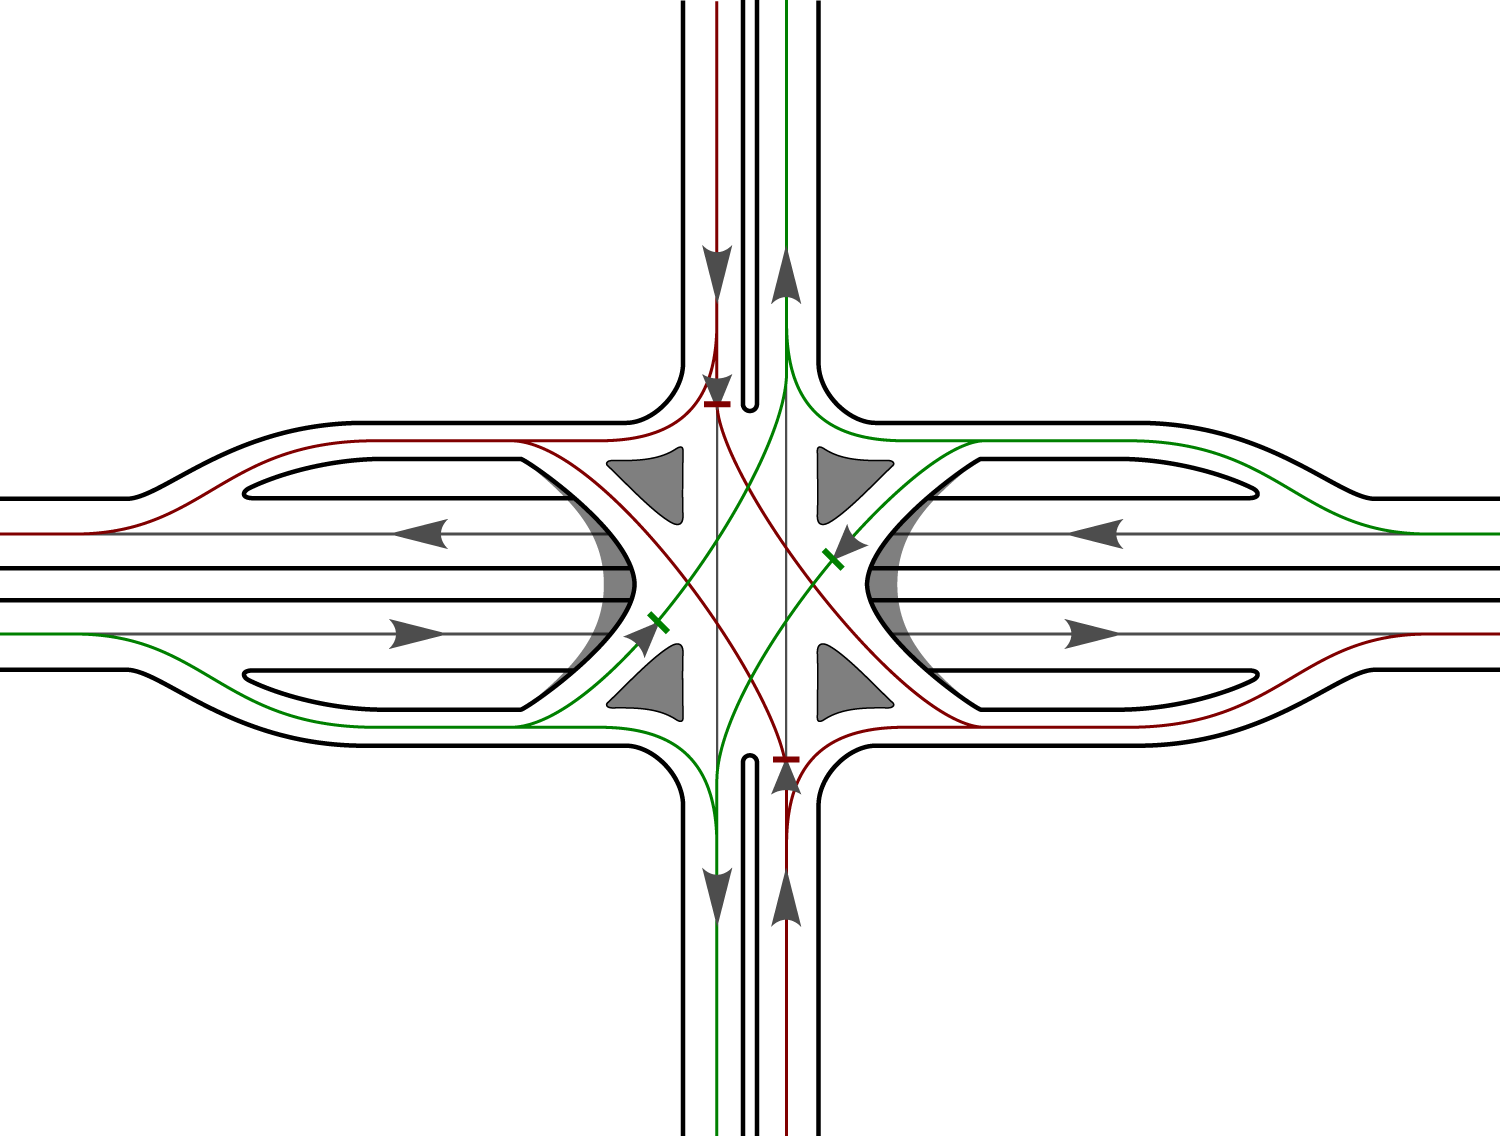 Diagram of single point interchange